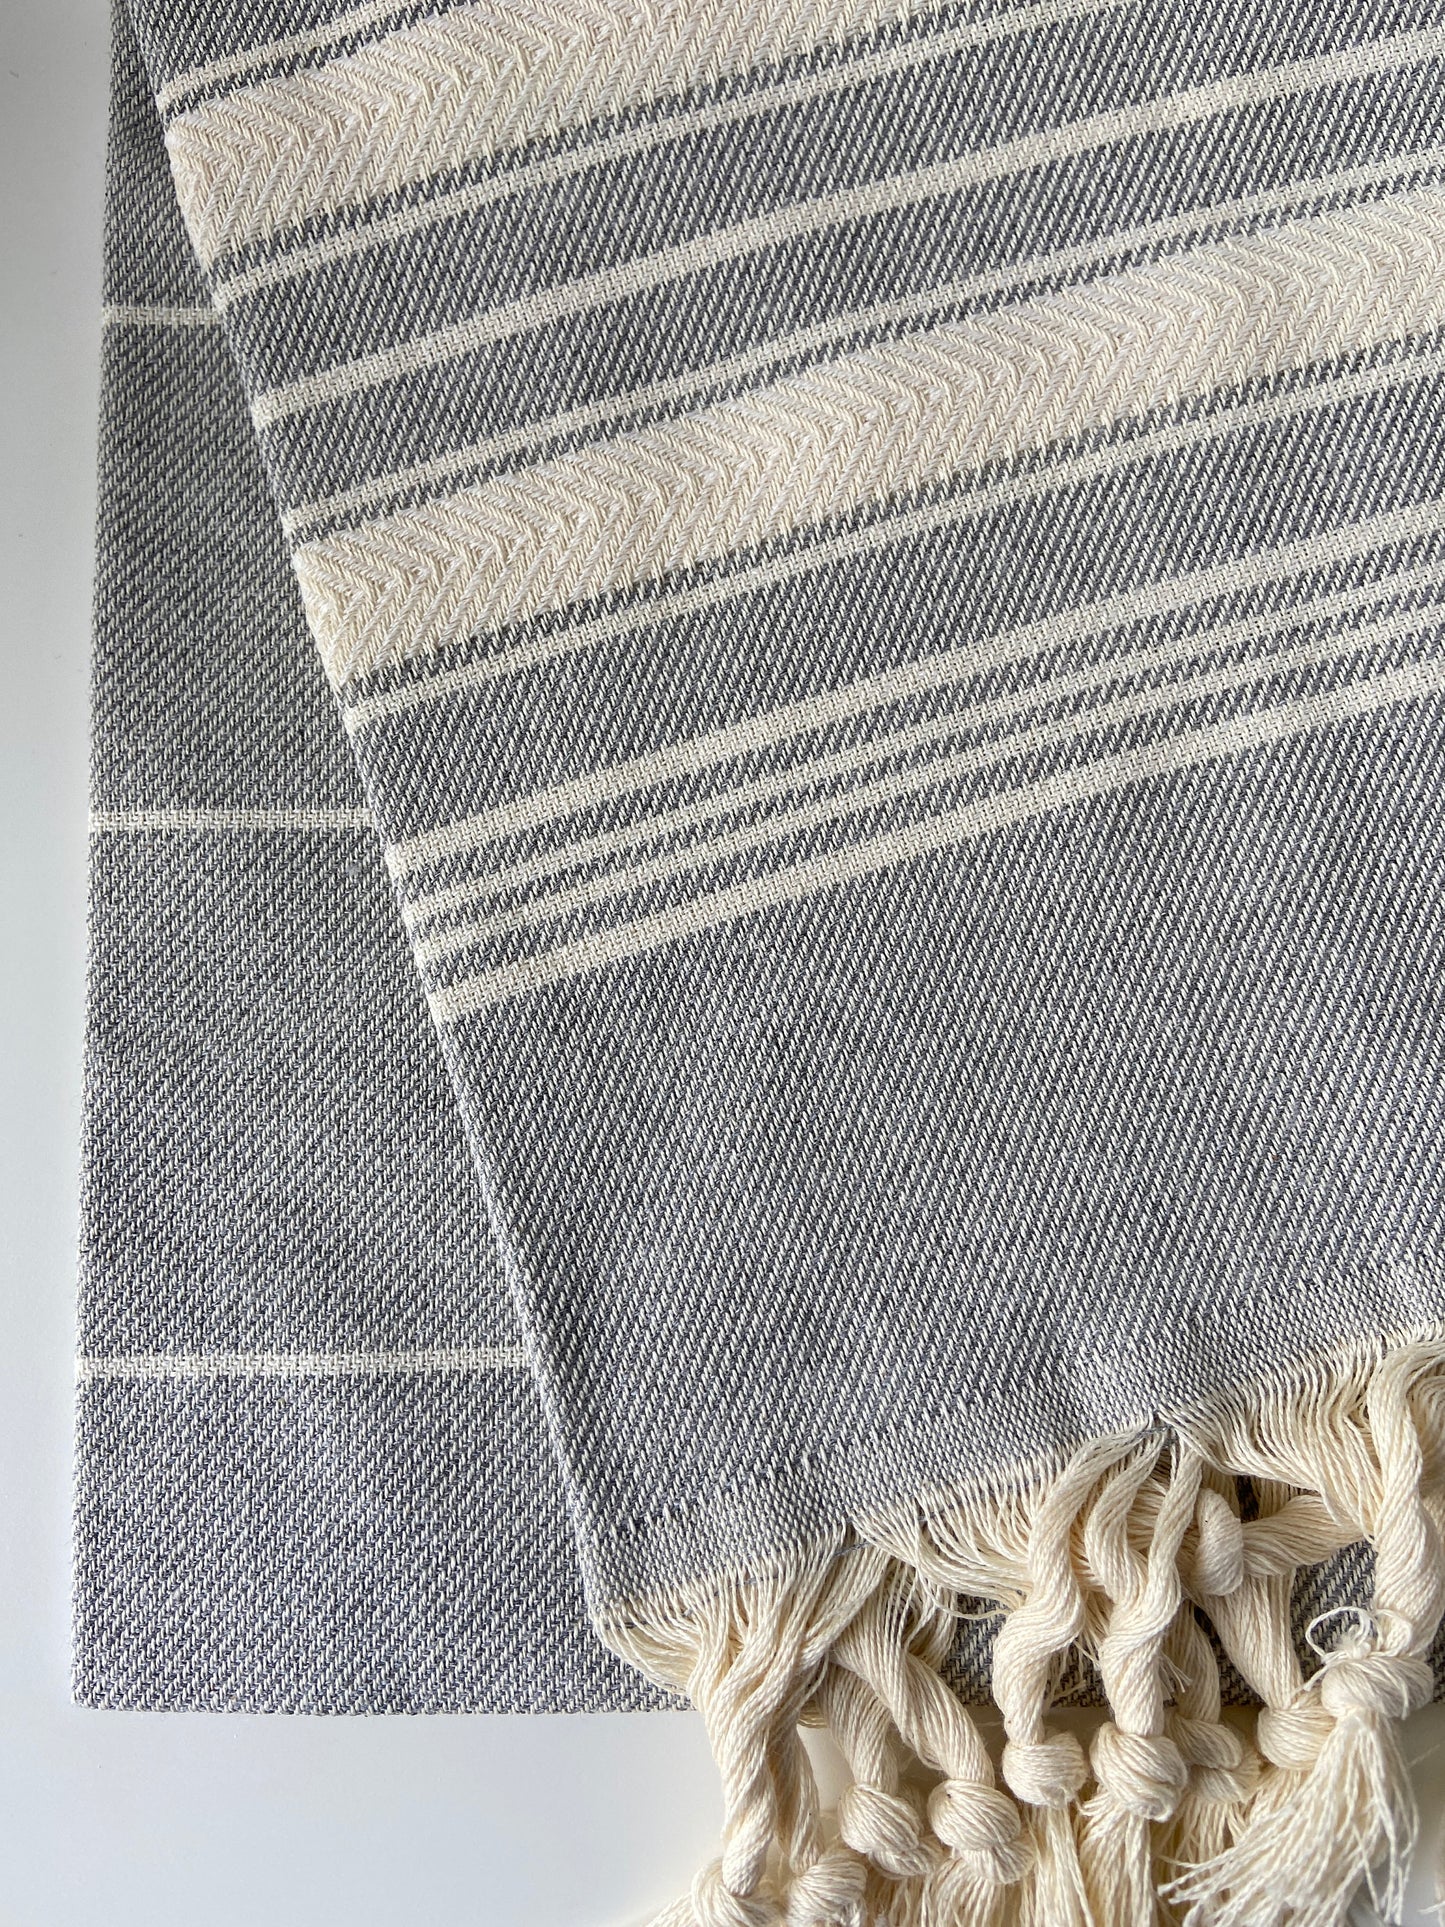 Striped Design Tea Towel - Grey Kitchen Towel - Bathroom Hand Towel - Cotton Towel